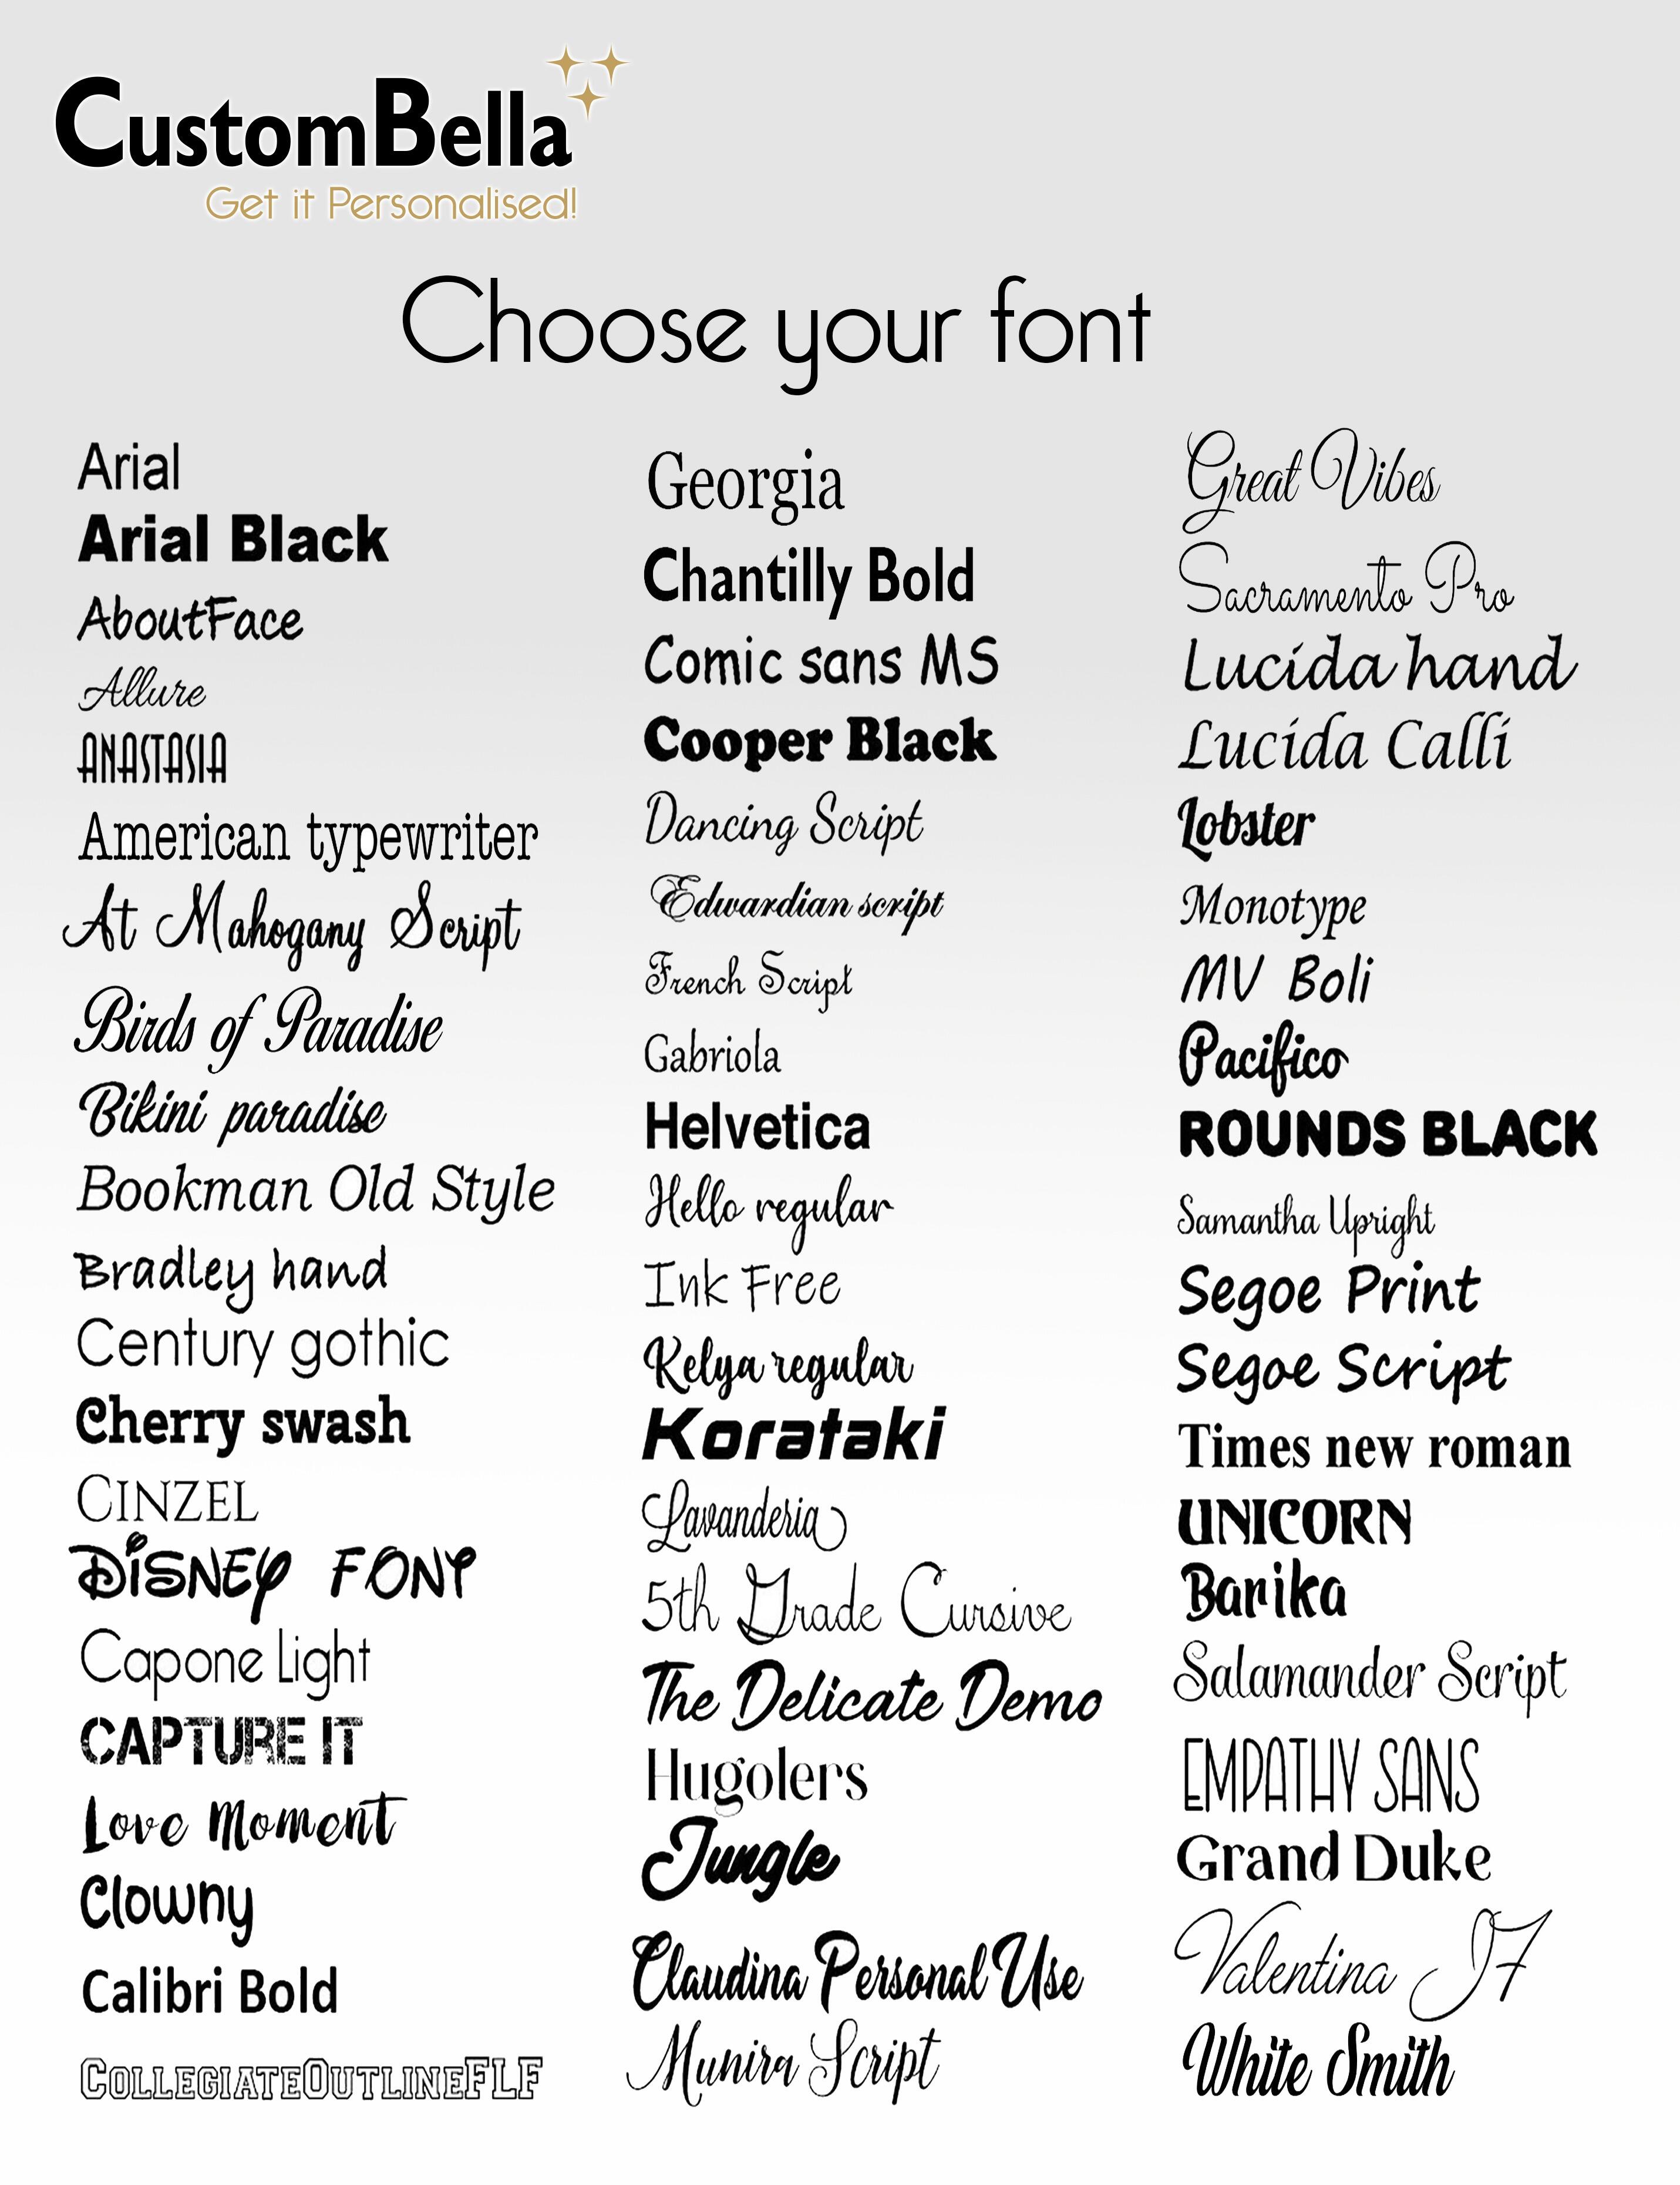 Custombella Fonts to select to print